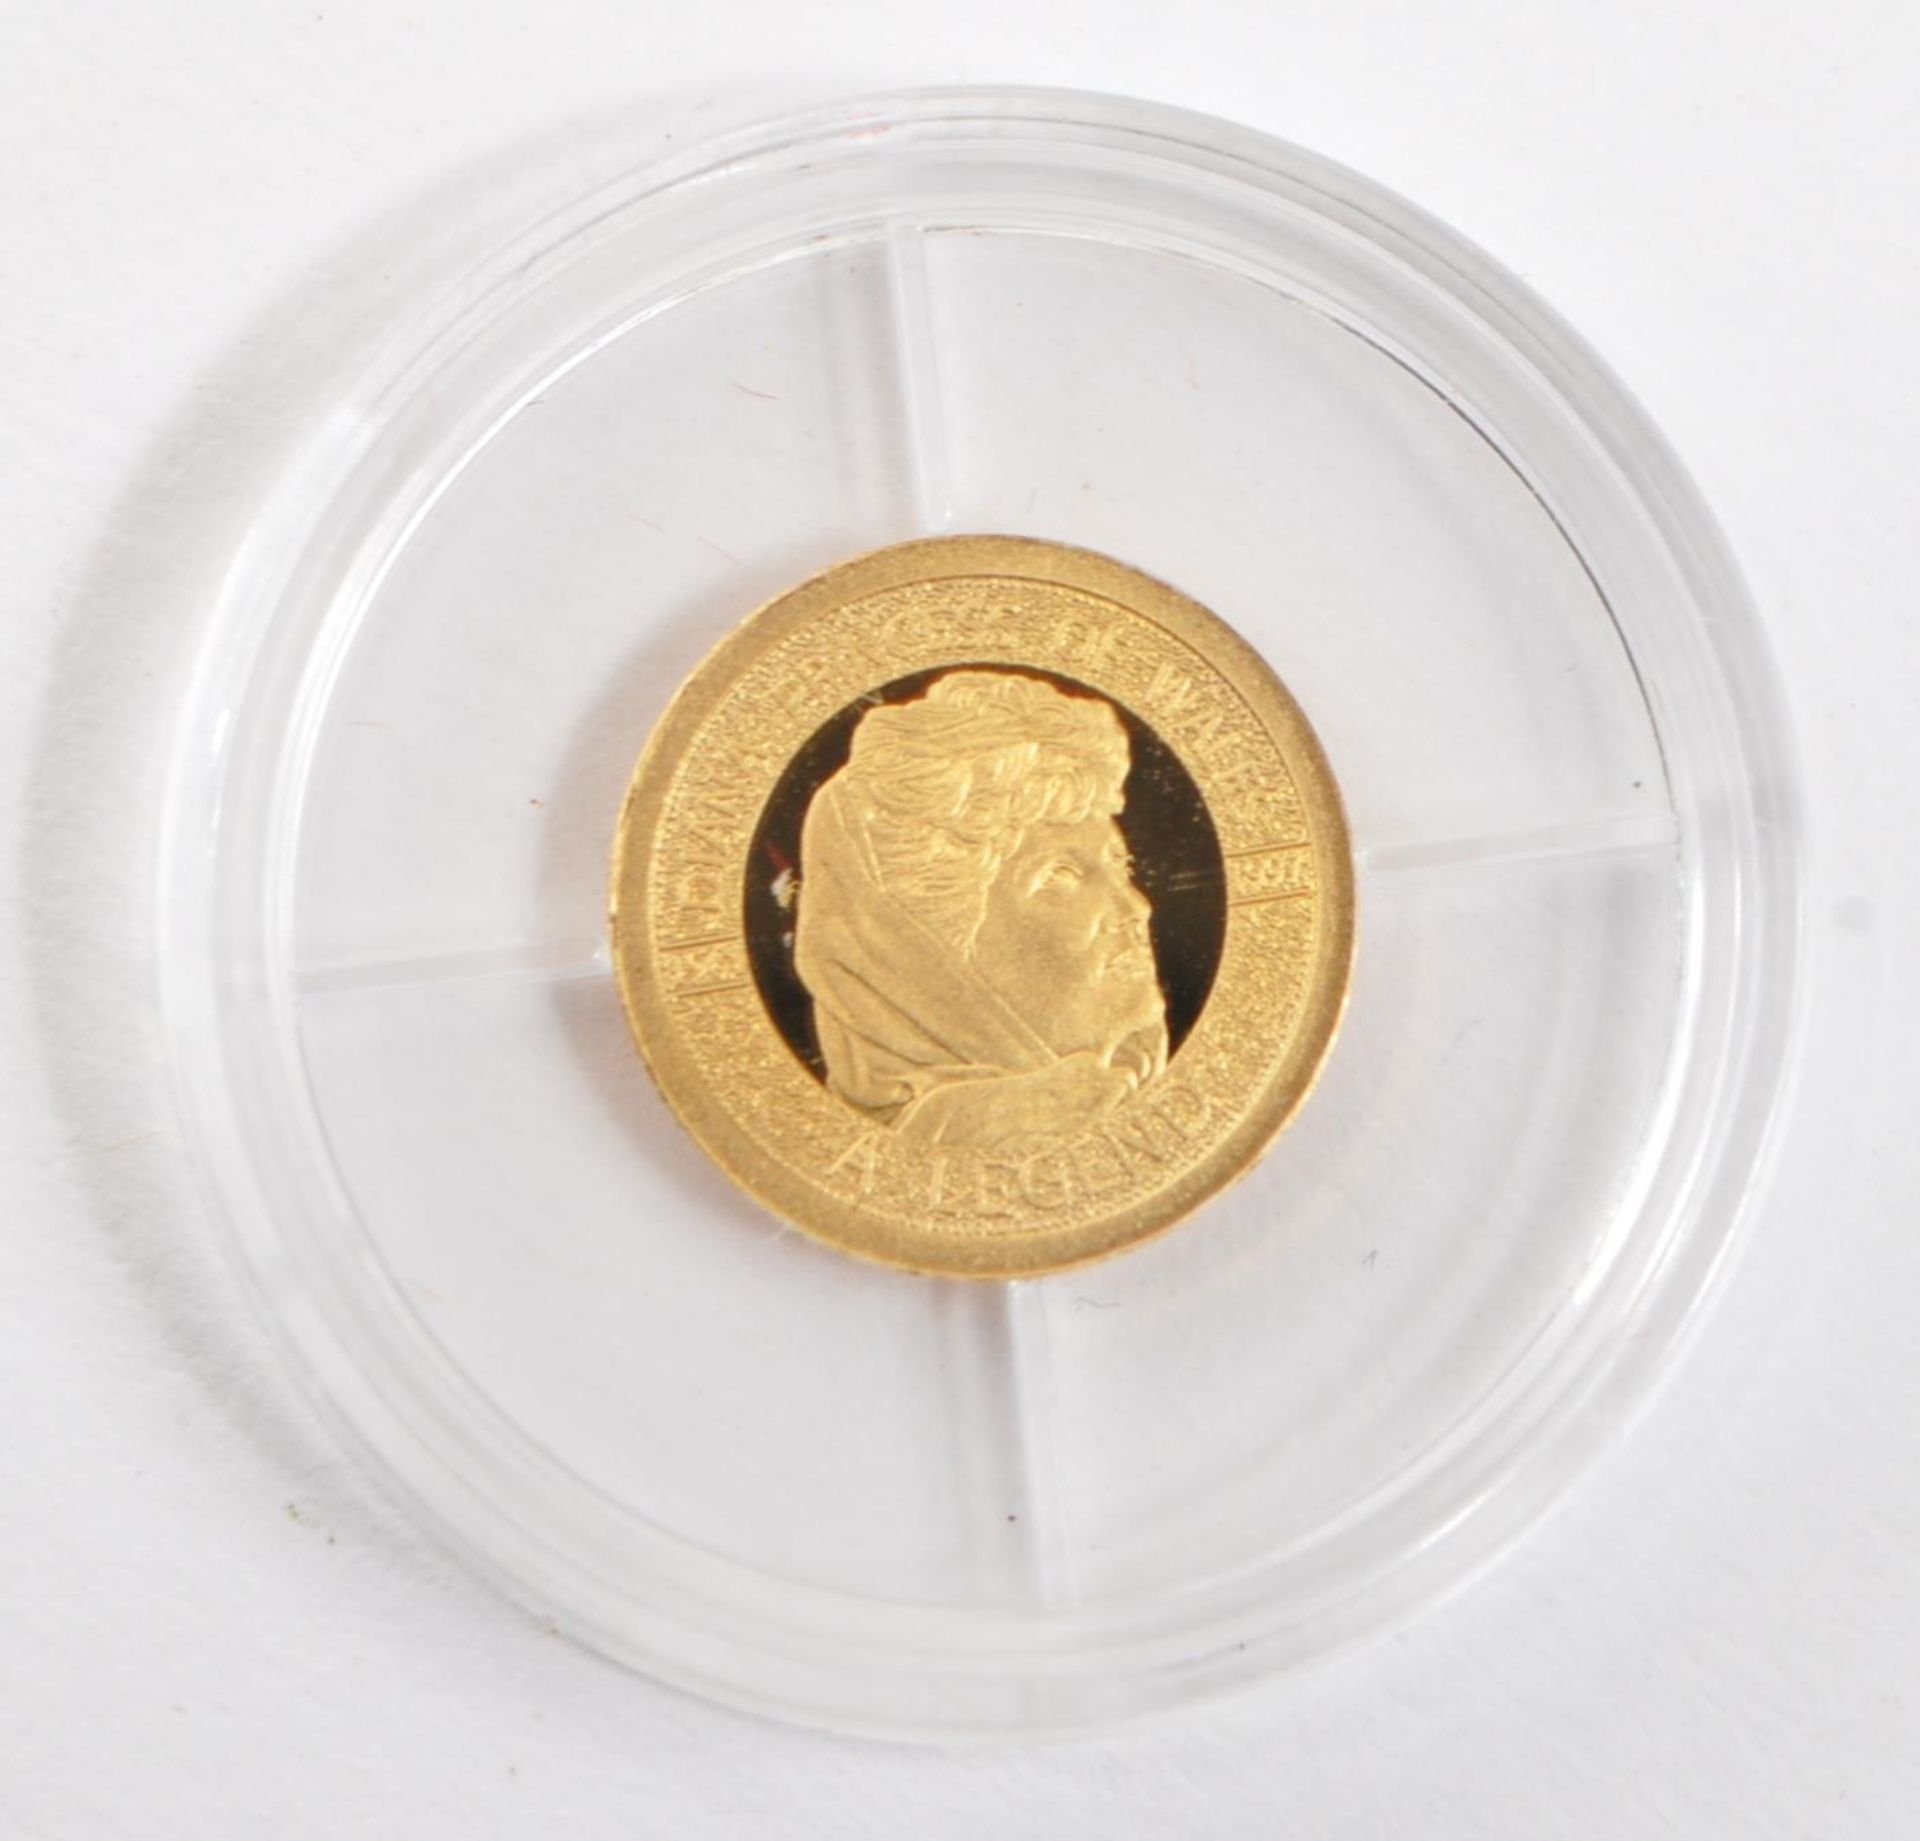 WINDSOR MINT - TWO FOURTEEN KARAT GOLD DIANA COINS - Image 2 of 5